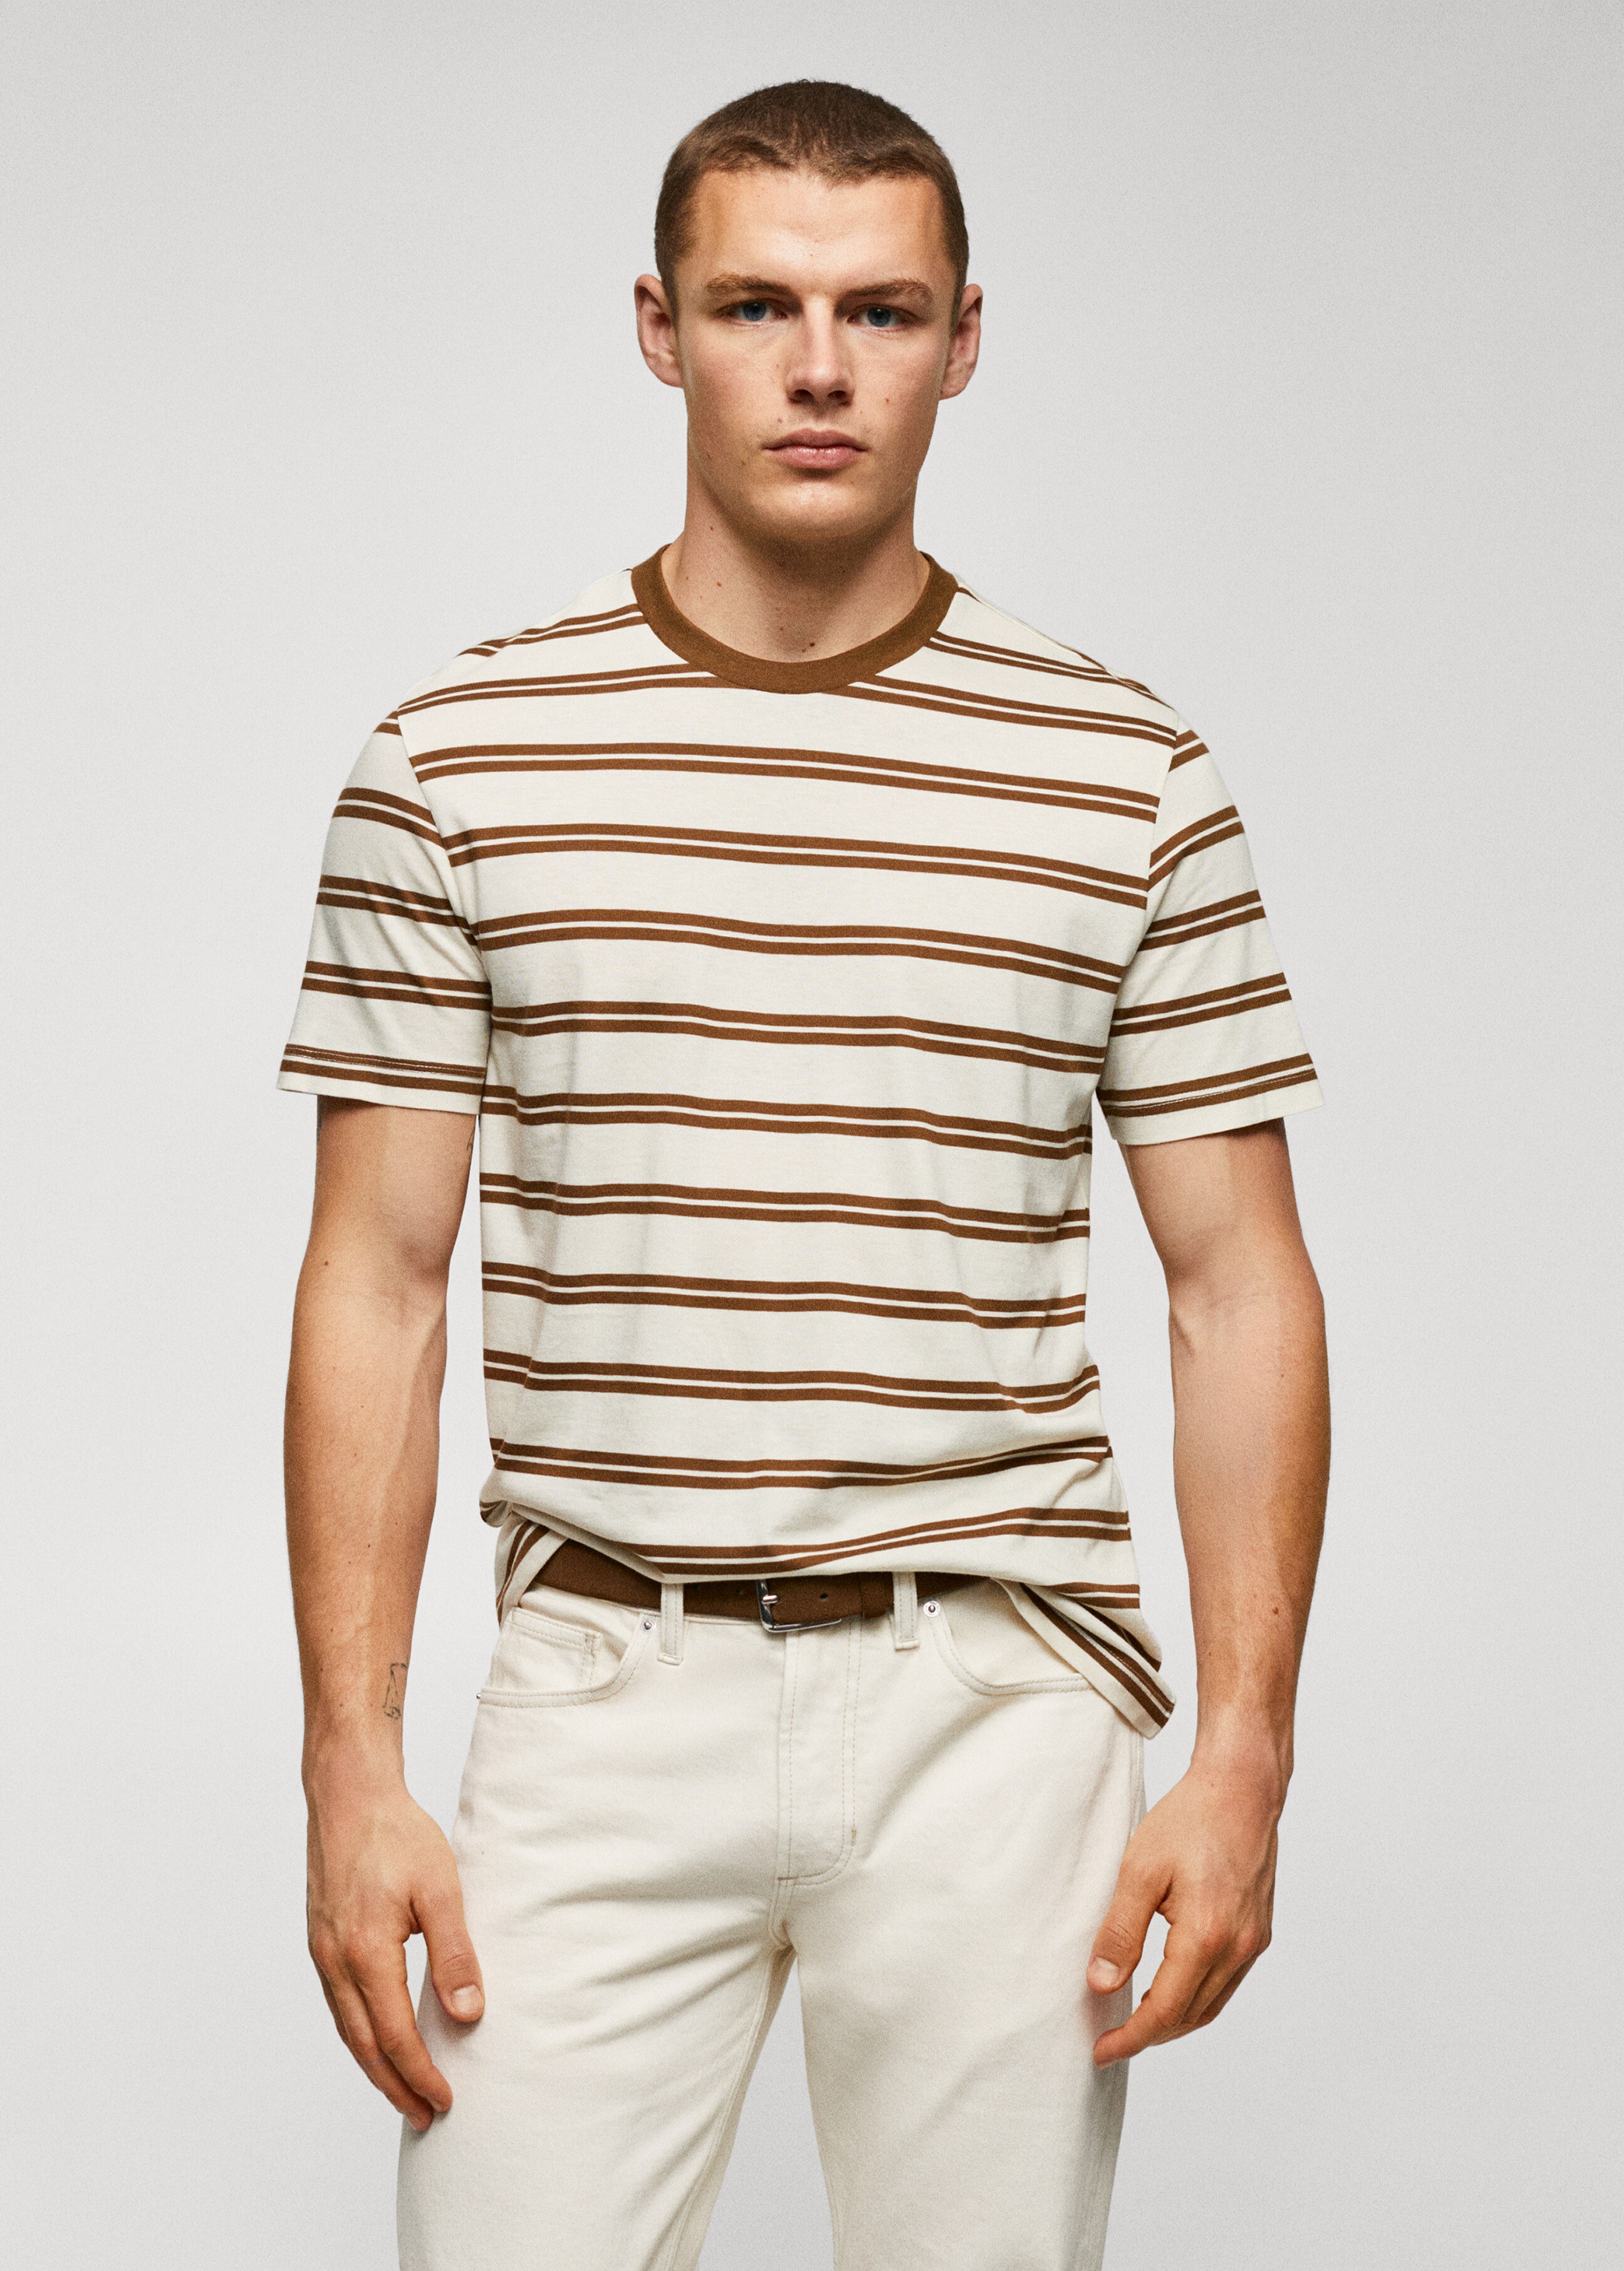 Striped modal cotton knitted t-shirt - Medium plane